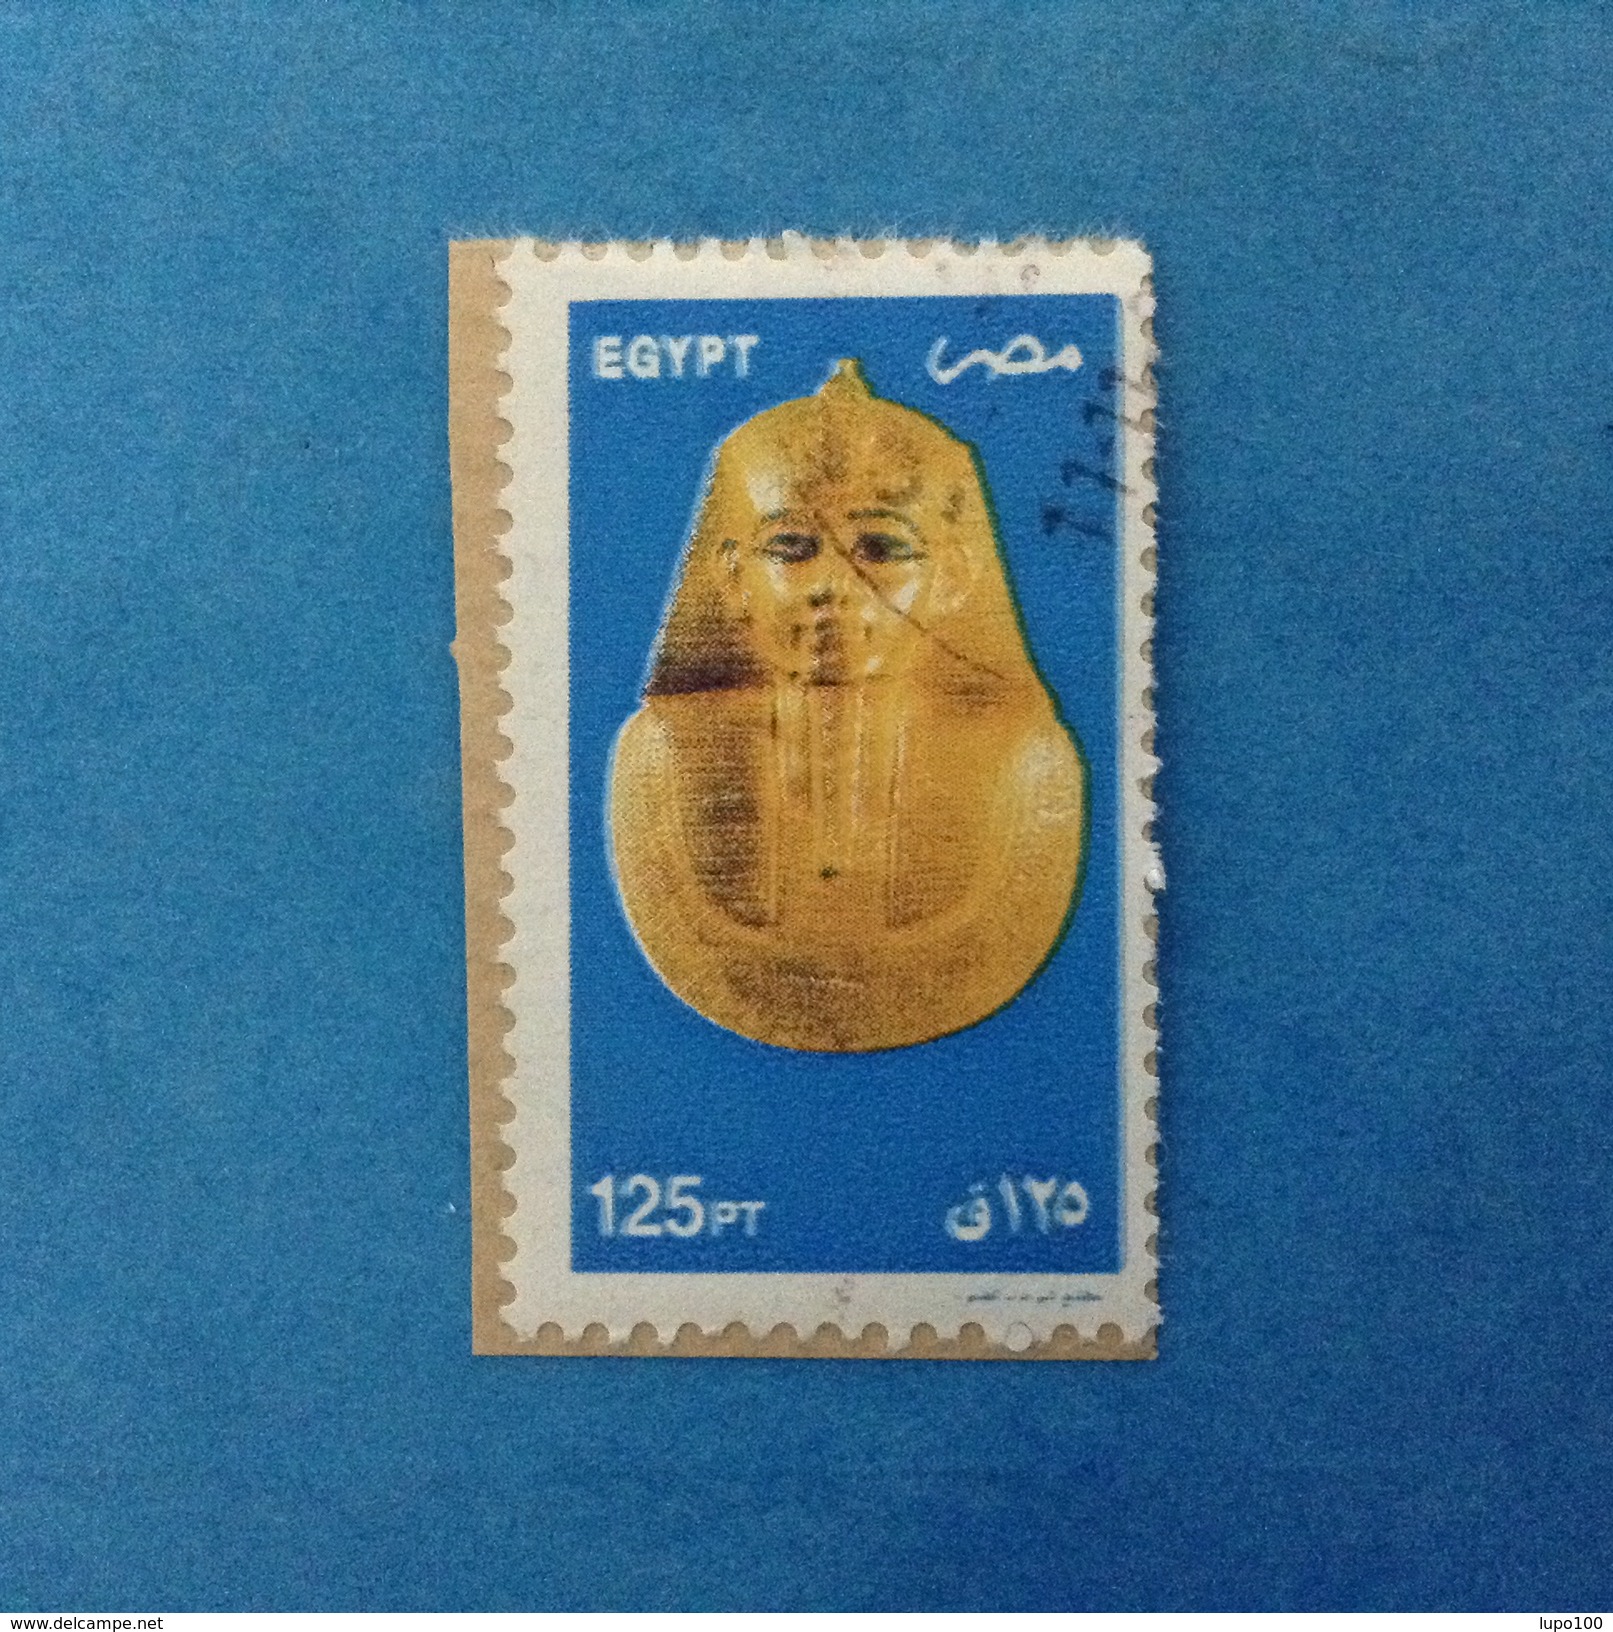 2002 EGITTO EGYPT FRANCOBOLLO USATO STAMP USED - MASCHERA FARAONE 125 - Gebruikt